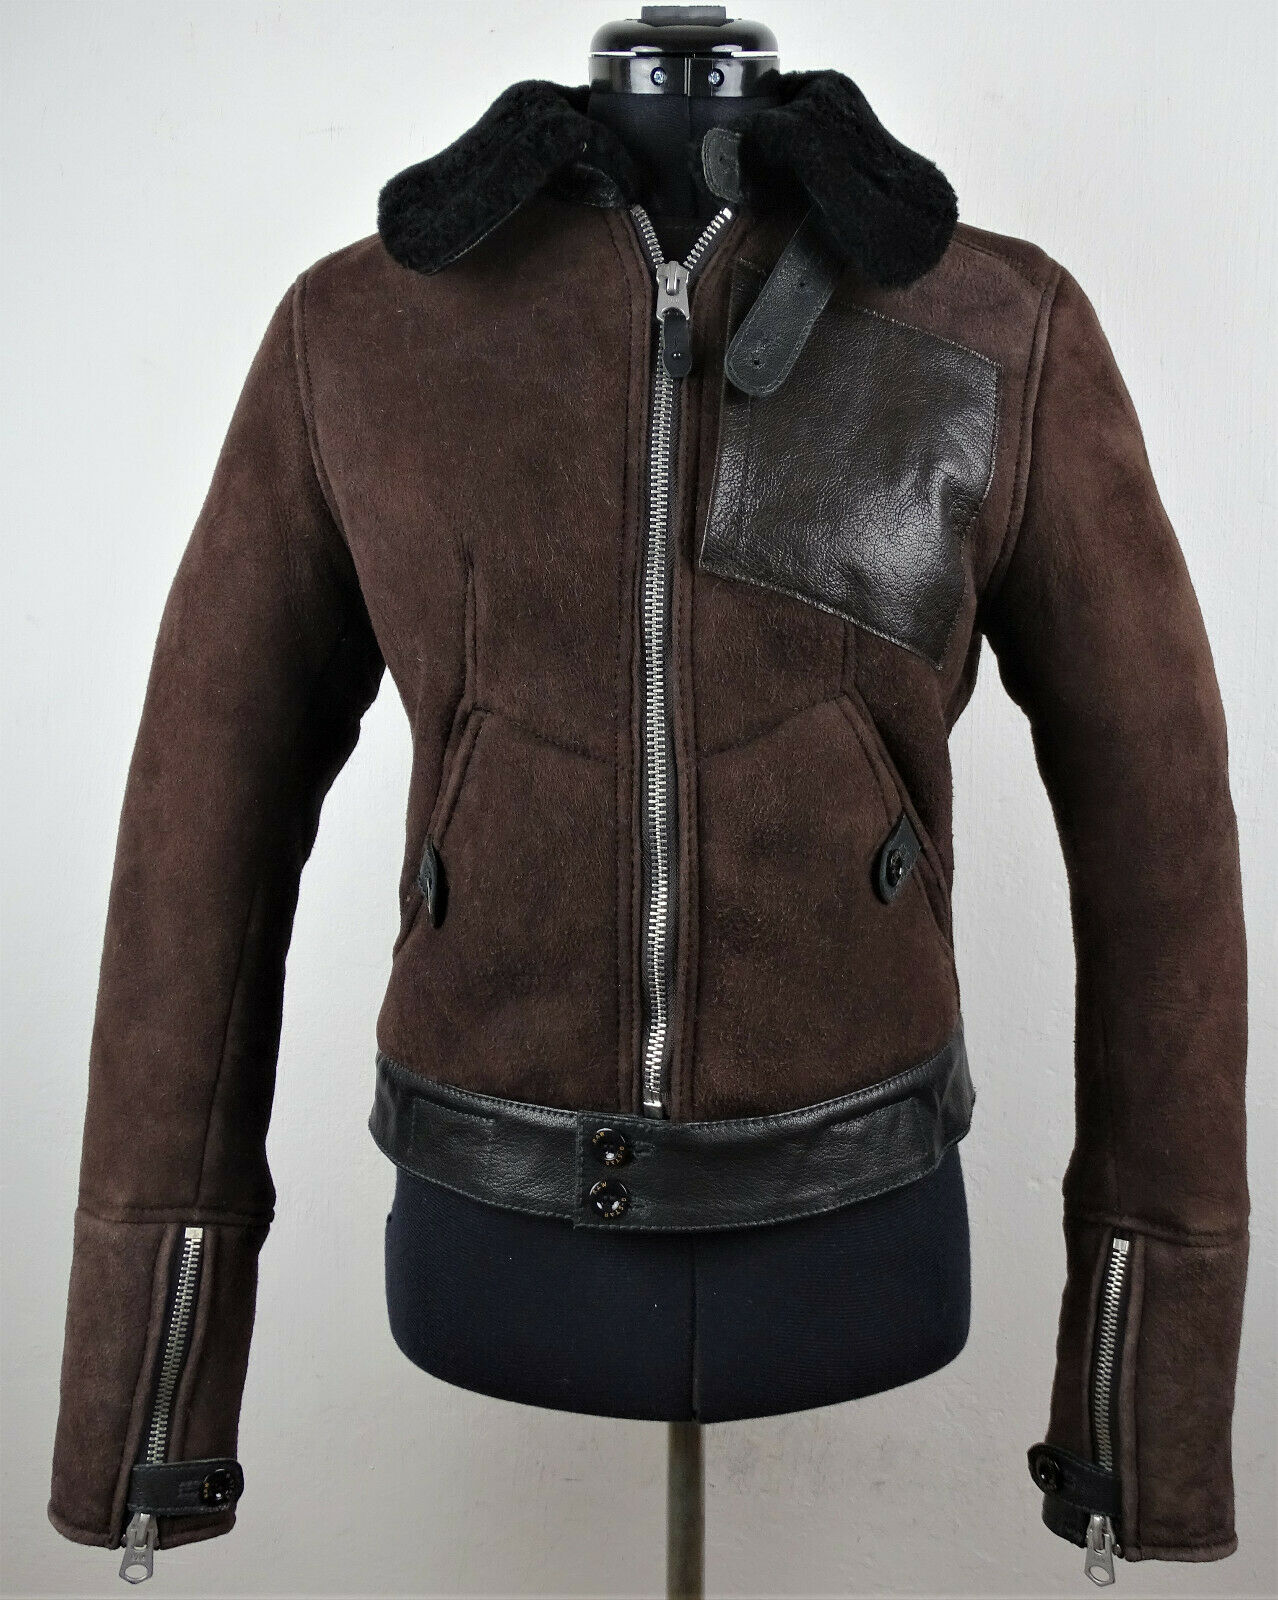 G star fashion Kanal jacket impression | Vintage Leather Jackets Forum